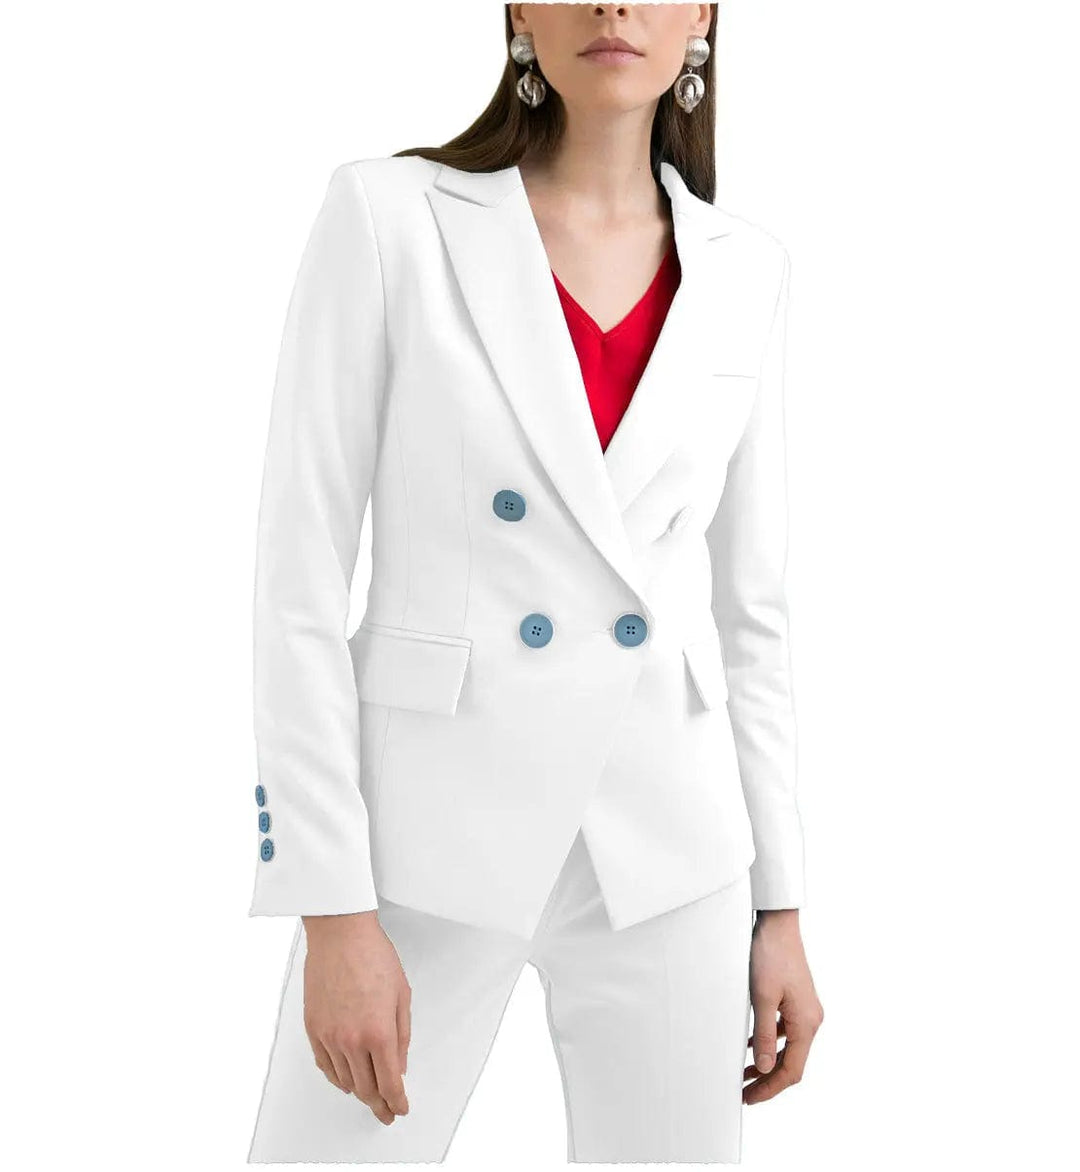 solovedress Formal 2 Pieces Women Suit Flat Peak Lapel Blazer